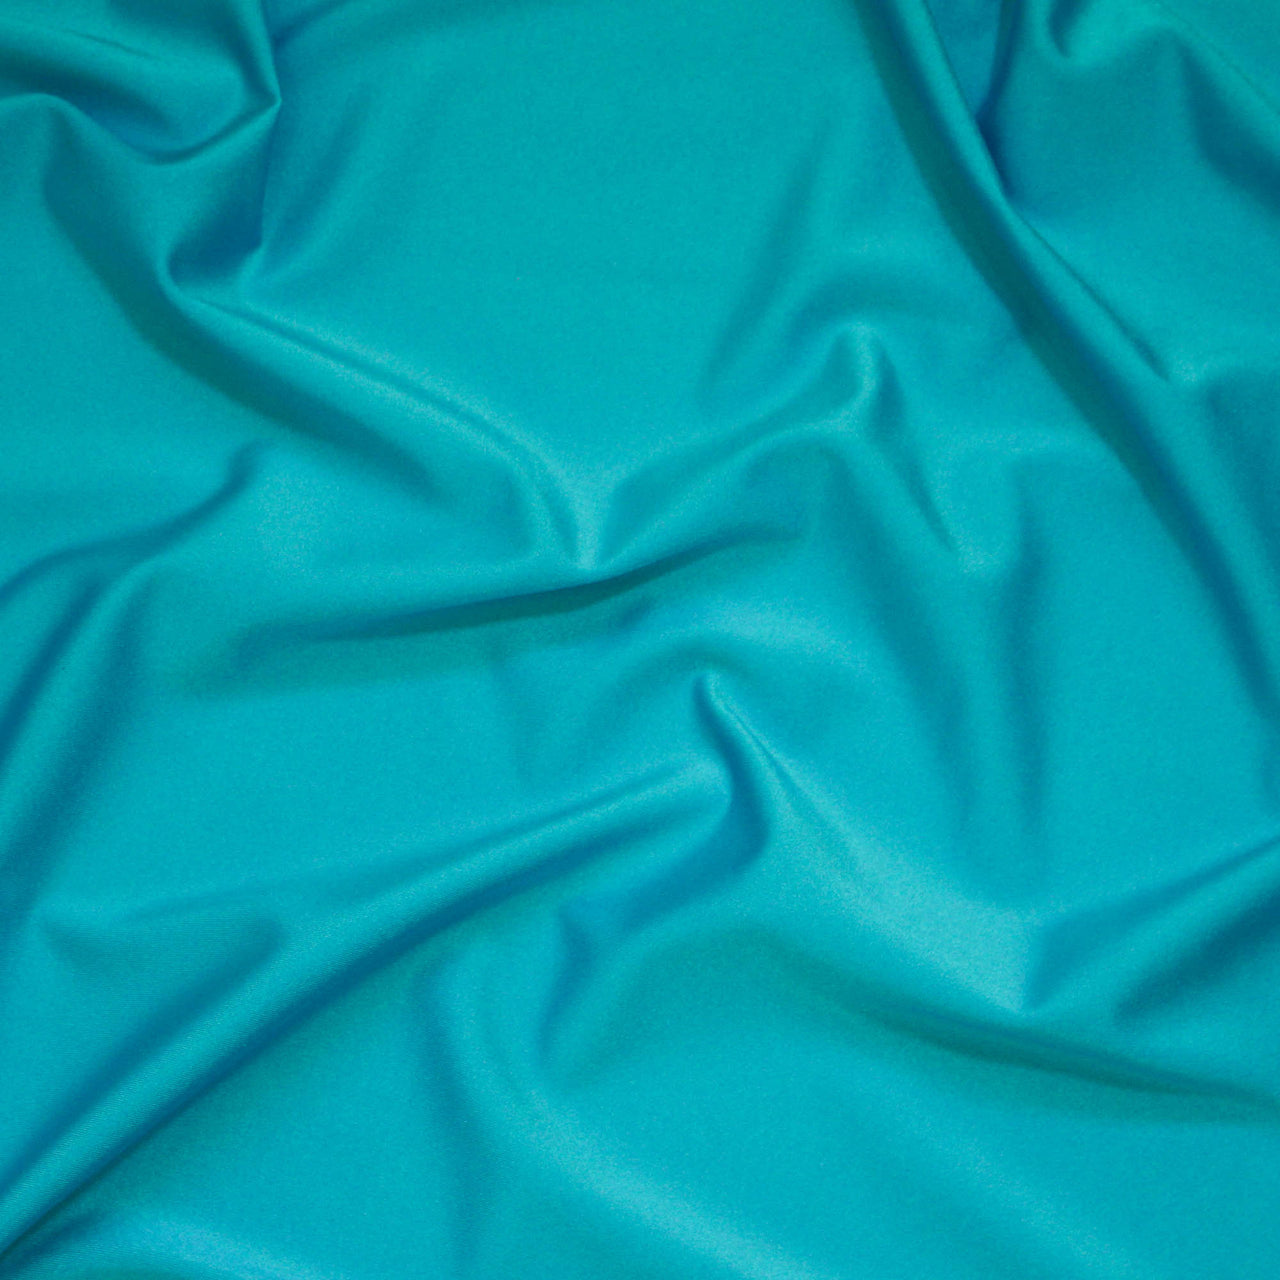 Turquoise - Nylon Spandex Fabric - 4 Way All Way Stretch Superior Quality - Leotards, Dancewear